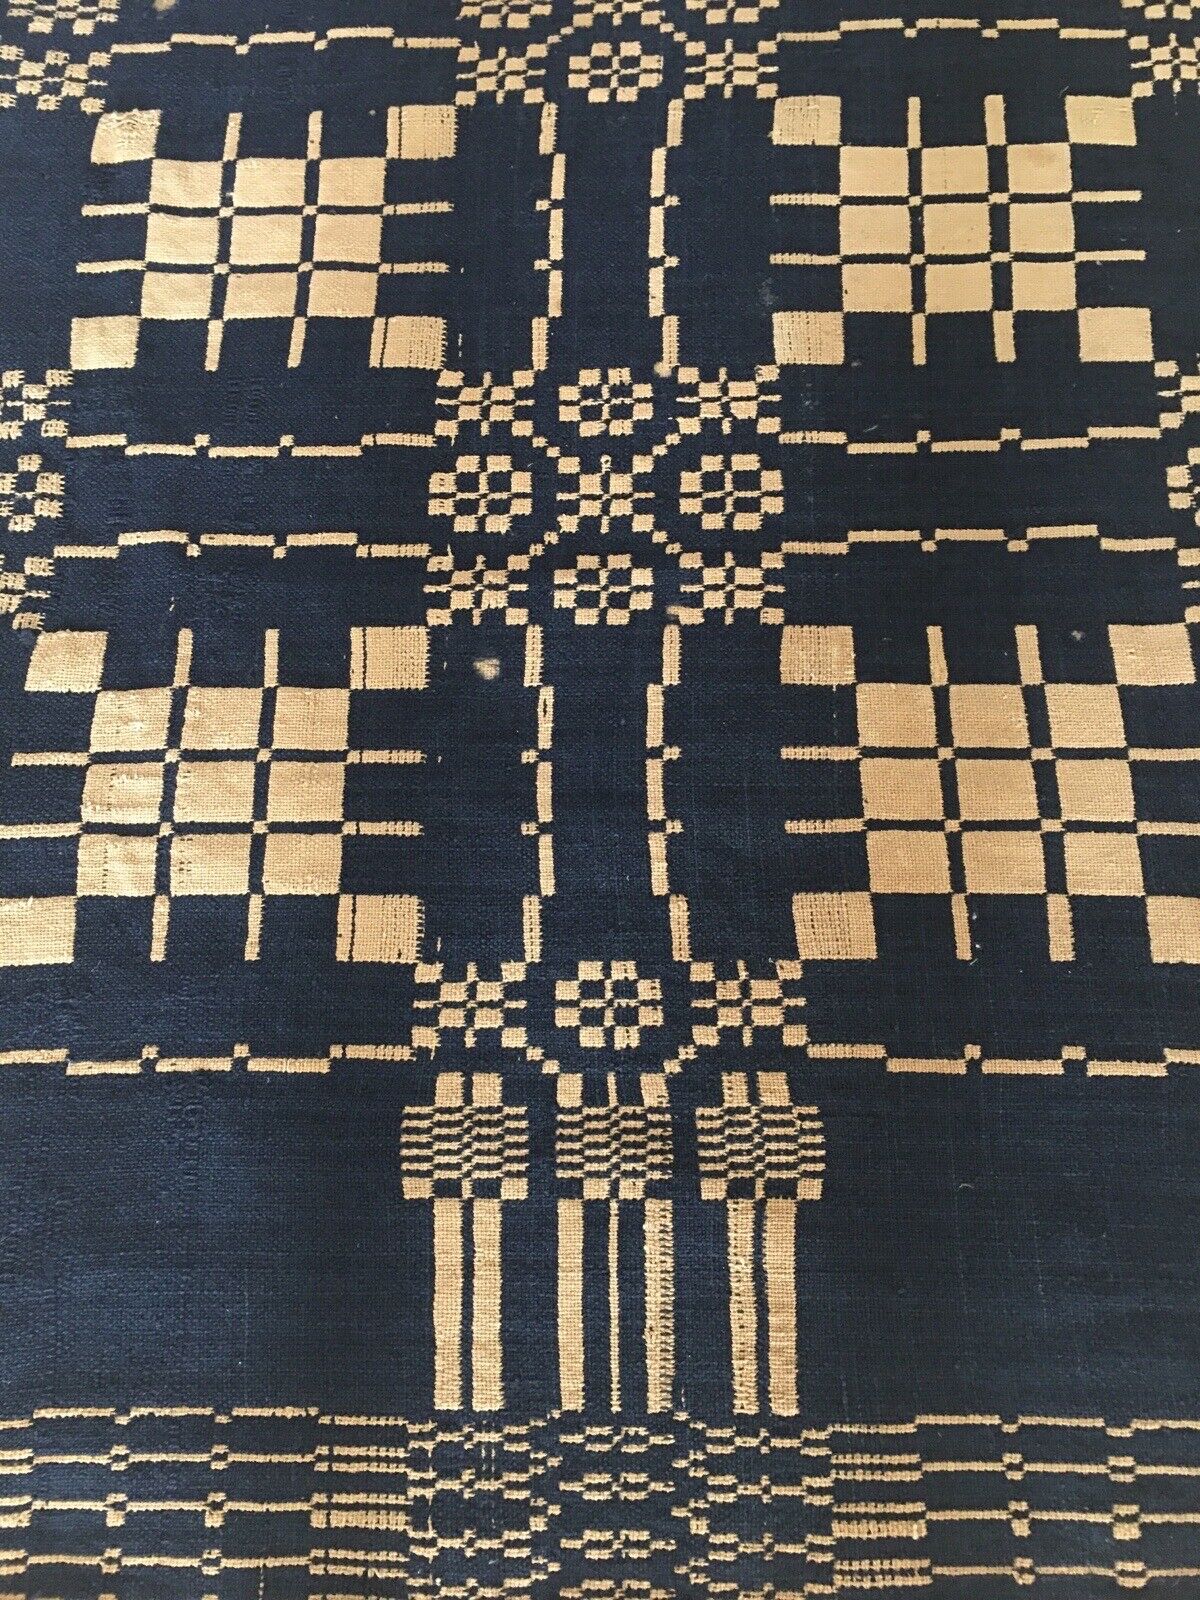 Antique Loom Woven Wool Fabric Jacquard Coverlet Pc #1~ Dk Indigo Blue Ecru Tan